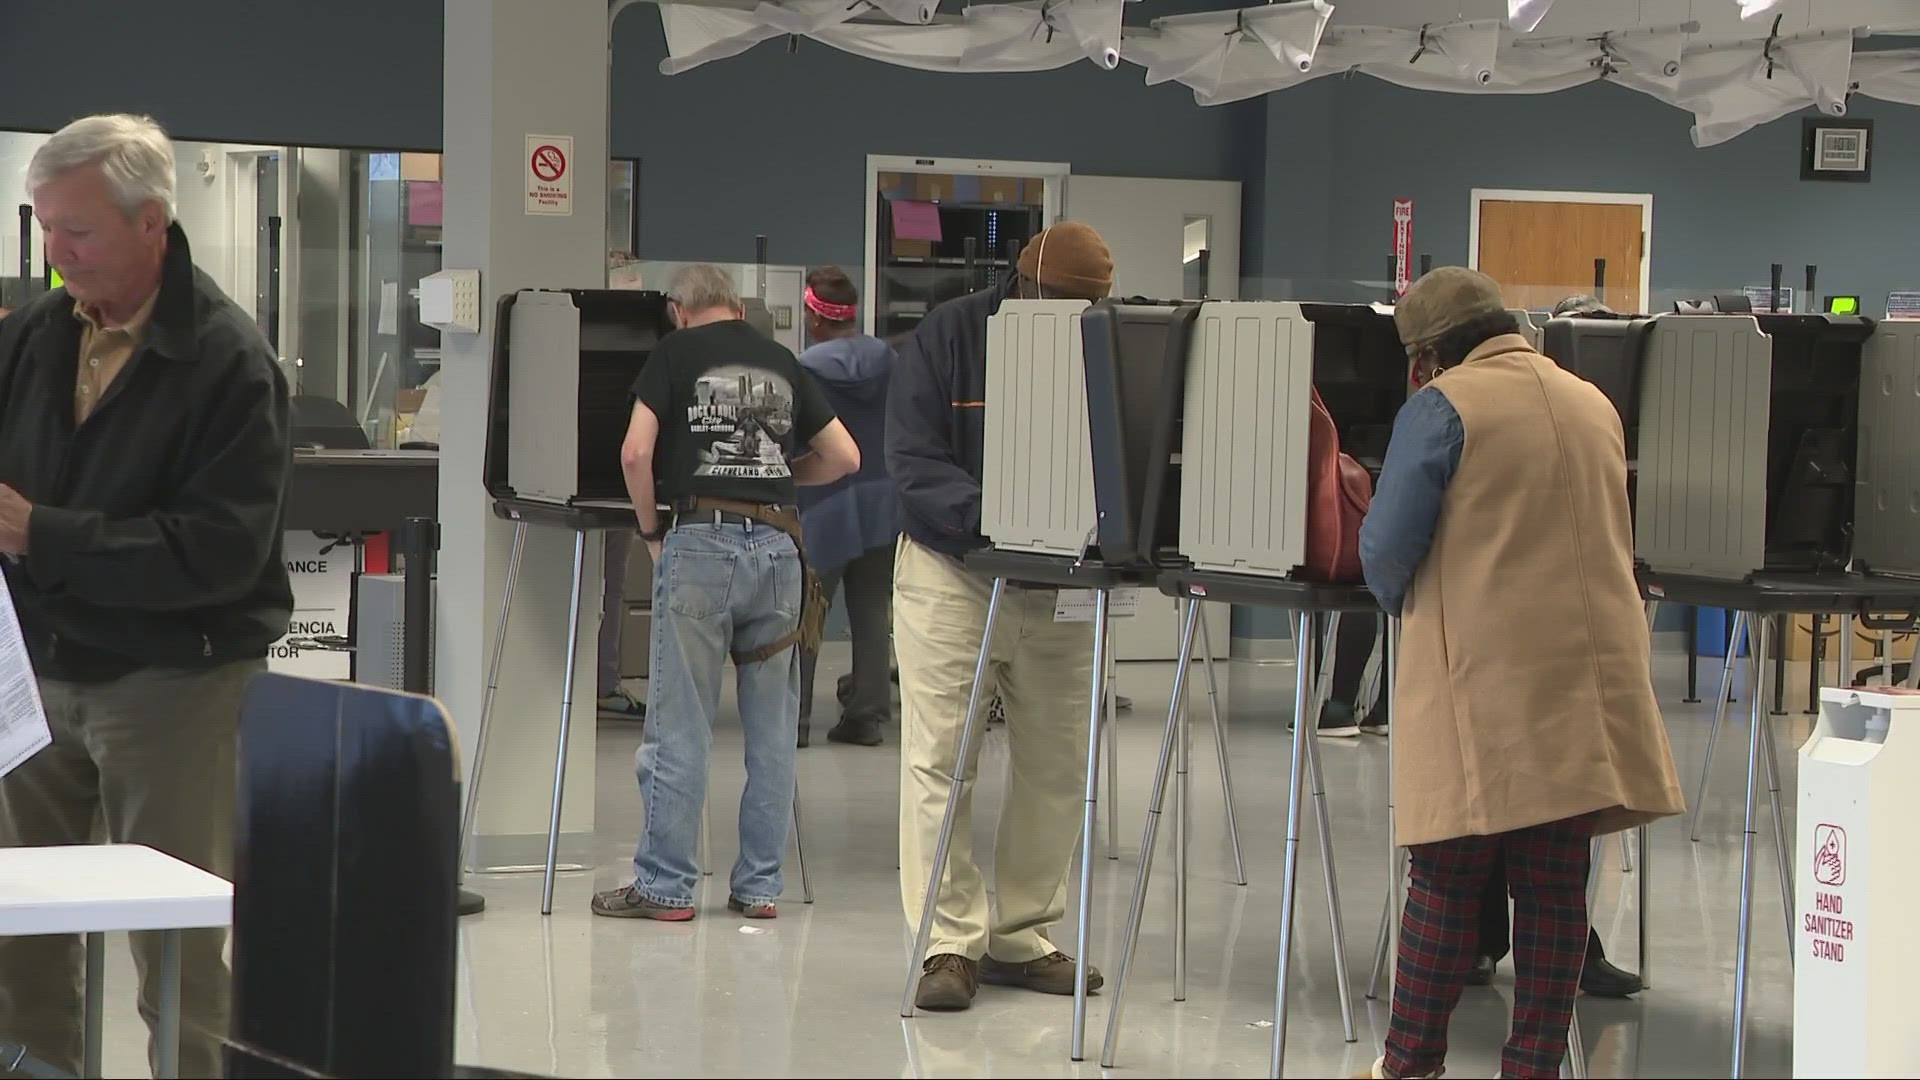 When is the voter registration deadline in Ohio?